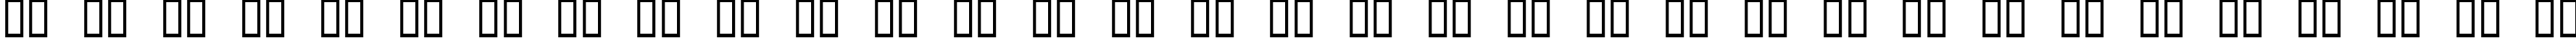 Пример написания русского алфавита шрифтом FuzzySock